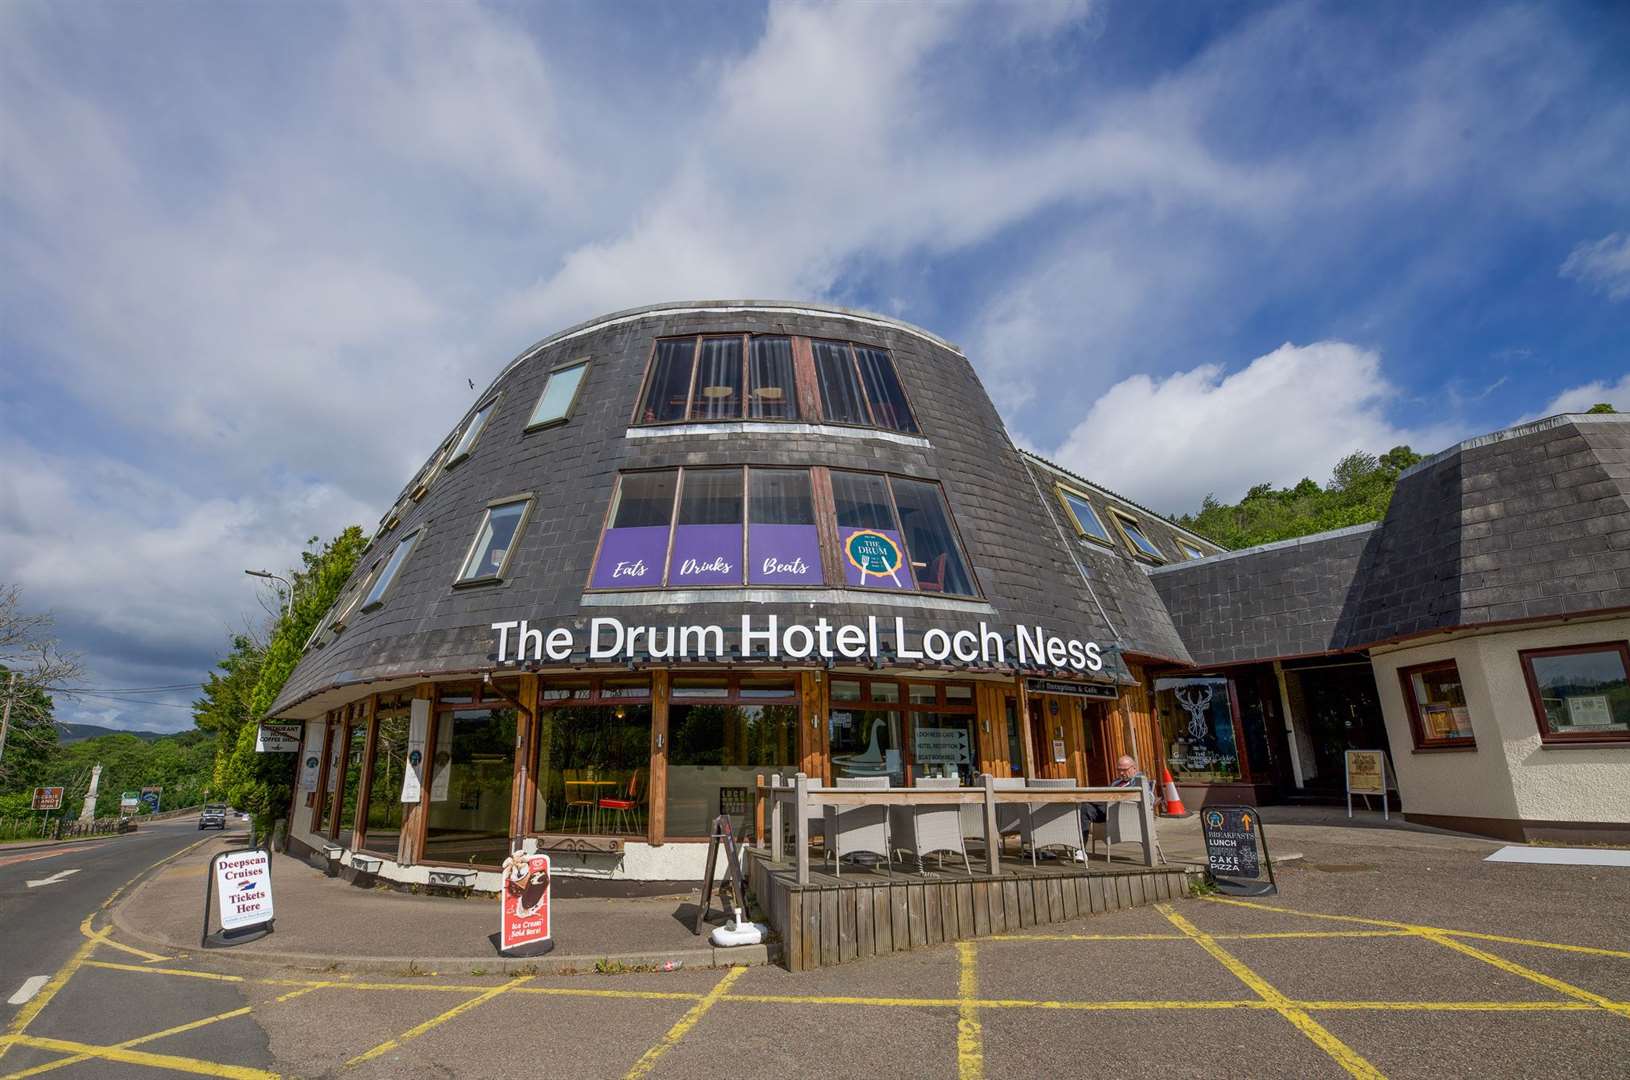 The Drum Hotel Loch Ness